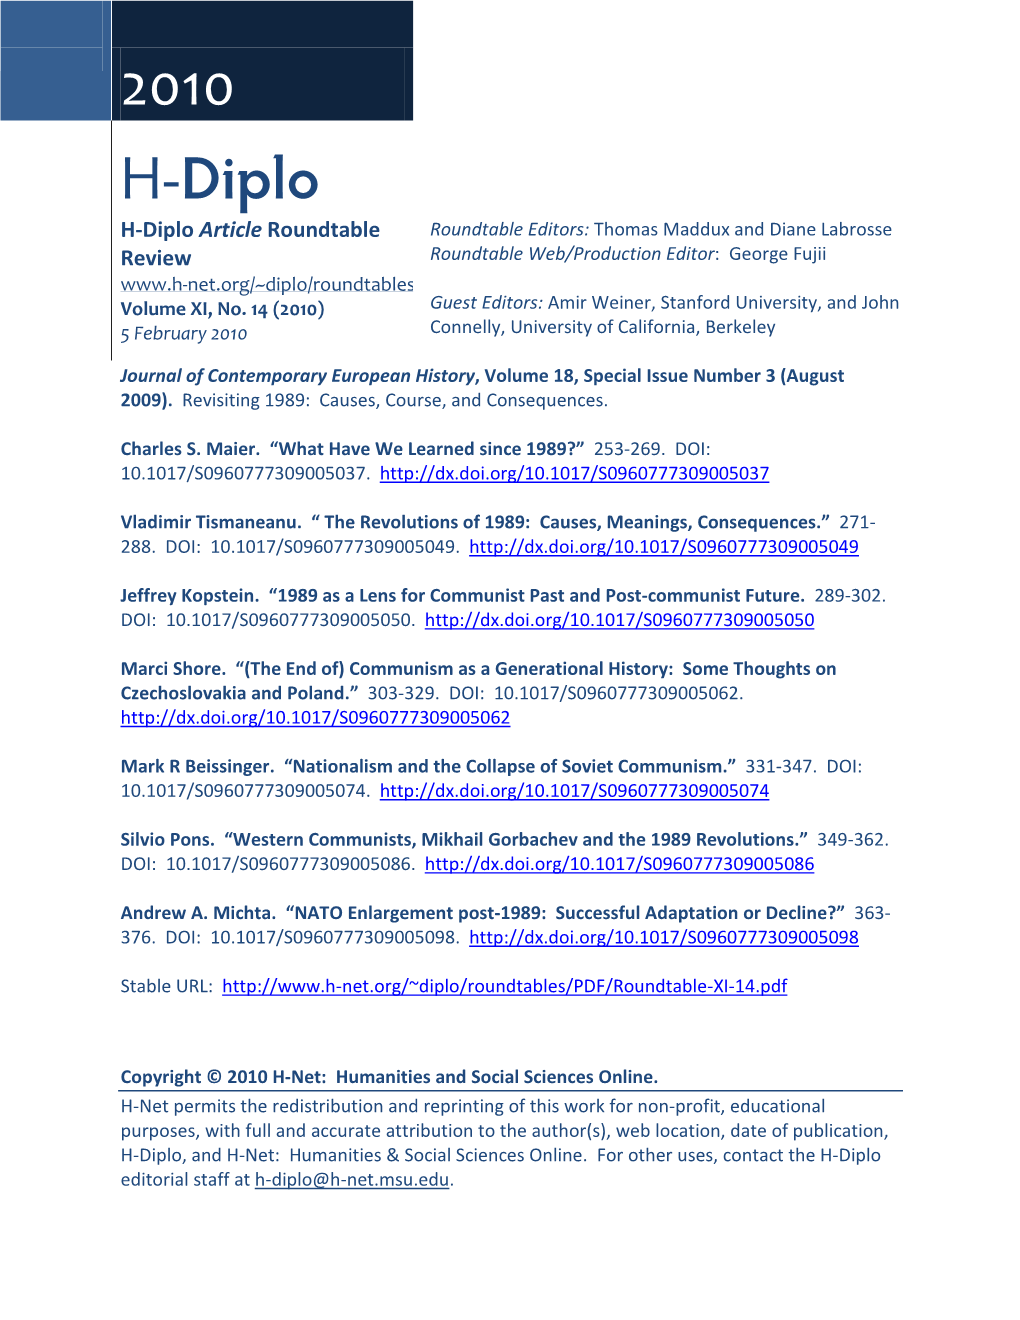 H-Diplo Roundtable, Vol. XI, No. 14